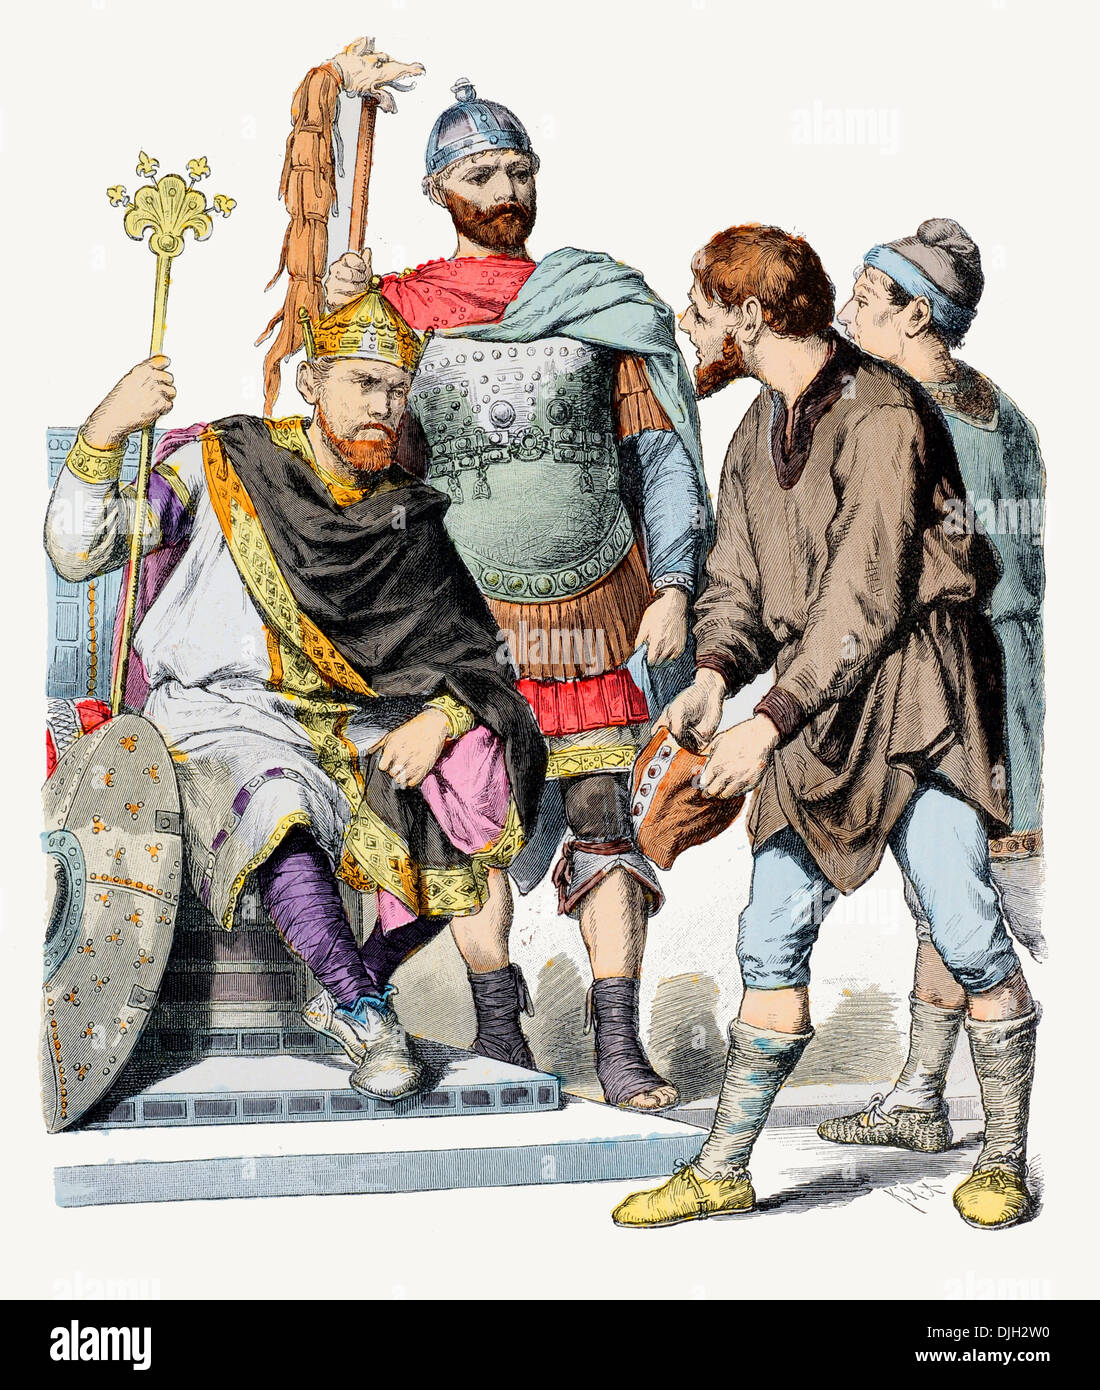 7th Century VII to 8th Century VIII Carolingian King, body guard and subjects Stock Photo